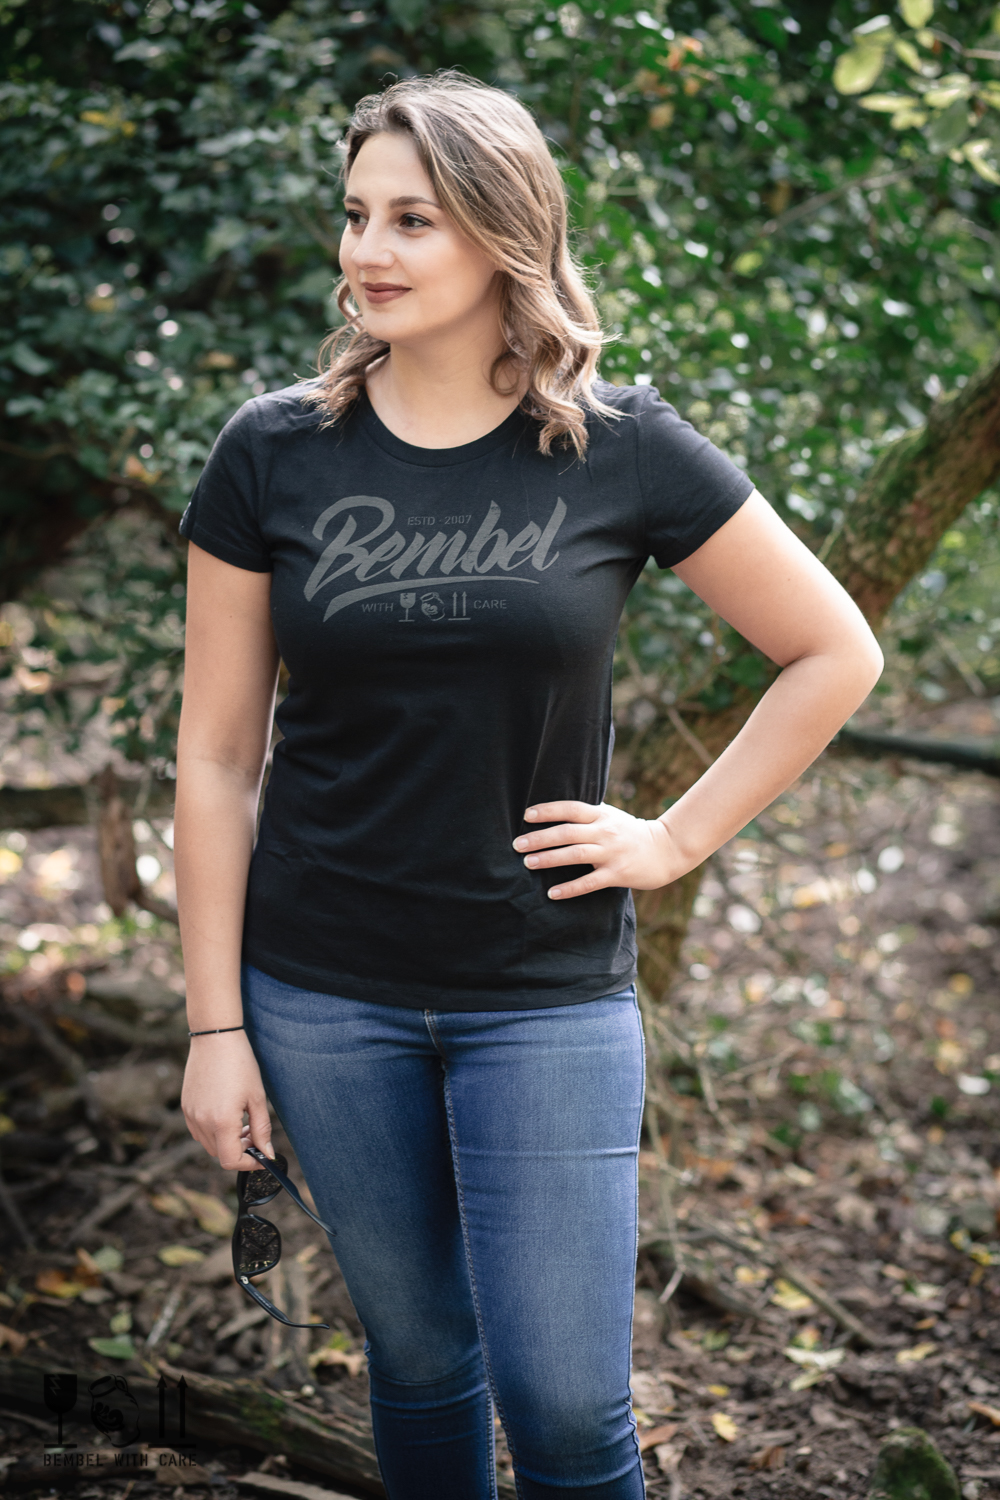 BEMBEL-WITH-CARE Girlie-Shirt Bembel-Schriftzug getragen im Wald, Apfelwein, Cider